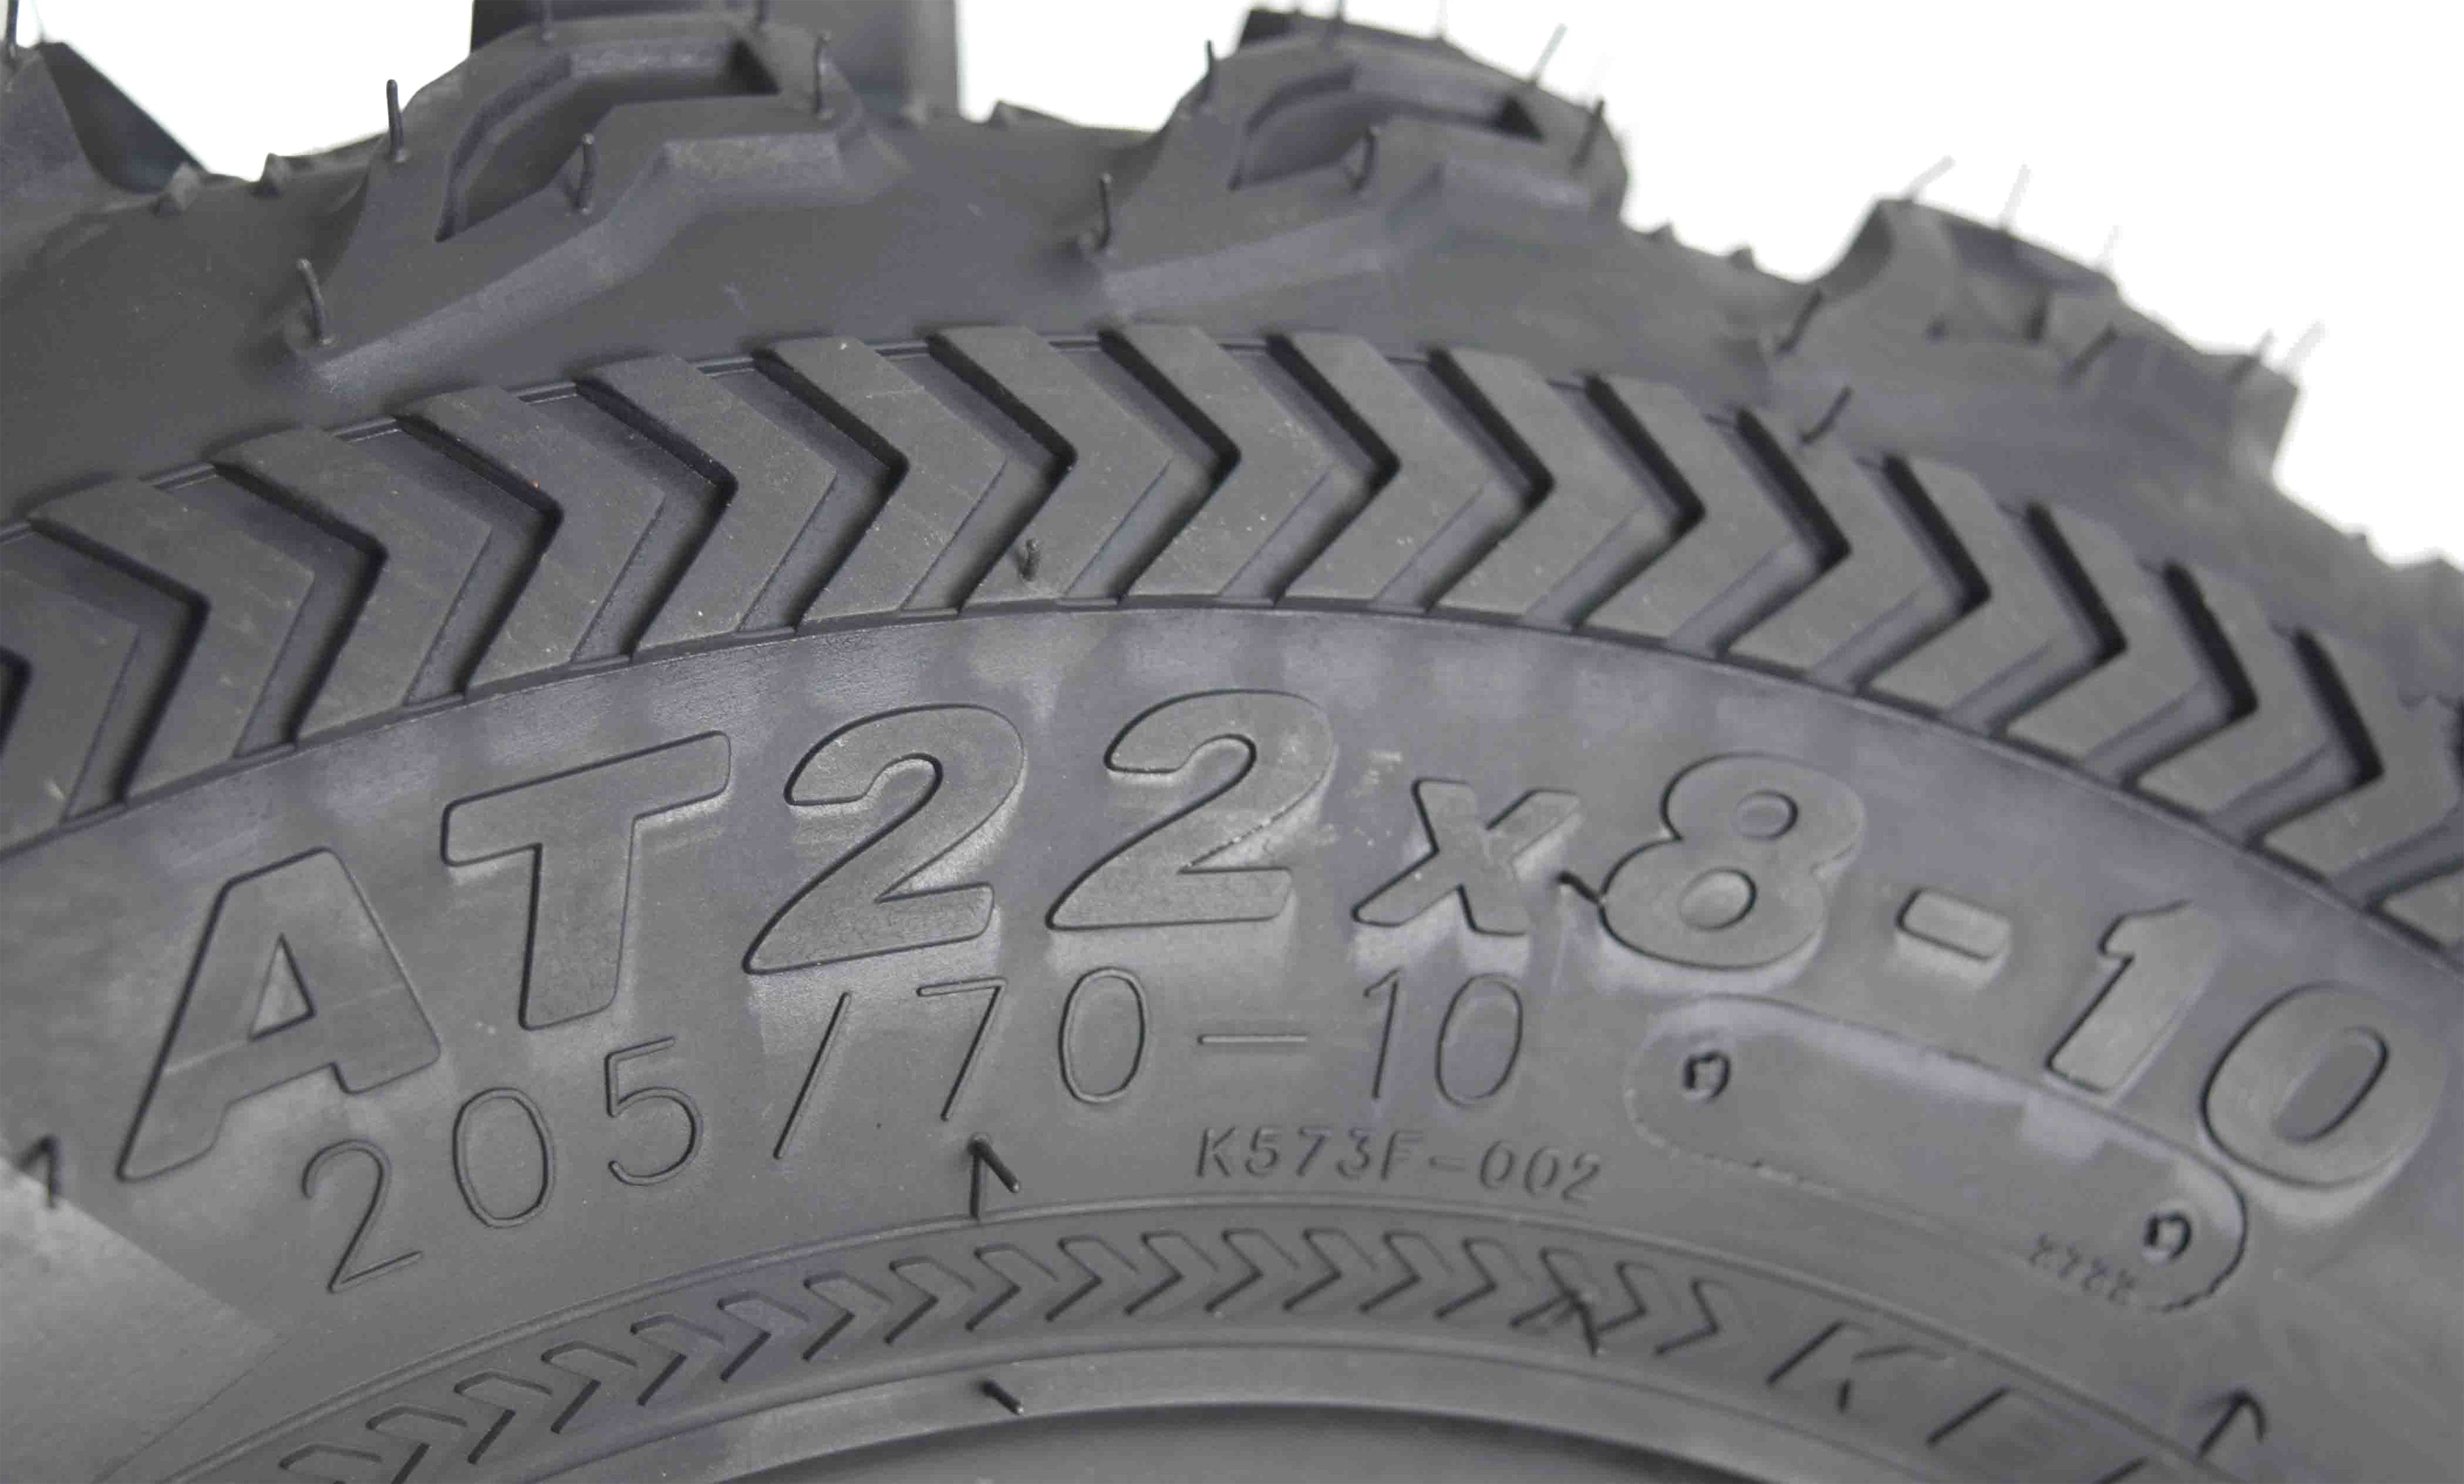 Kenda Bear Claw EX 22x8-10 Front 6 PLY ATV Tire Bearclaw 22x8x10 Single Tire